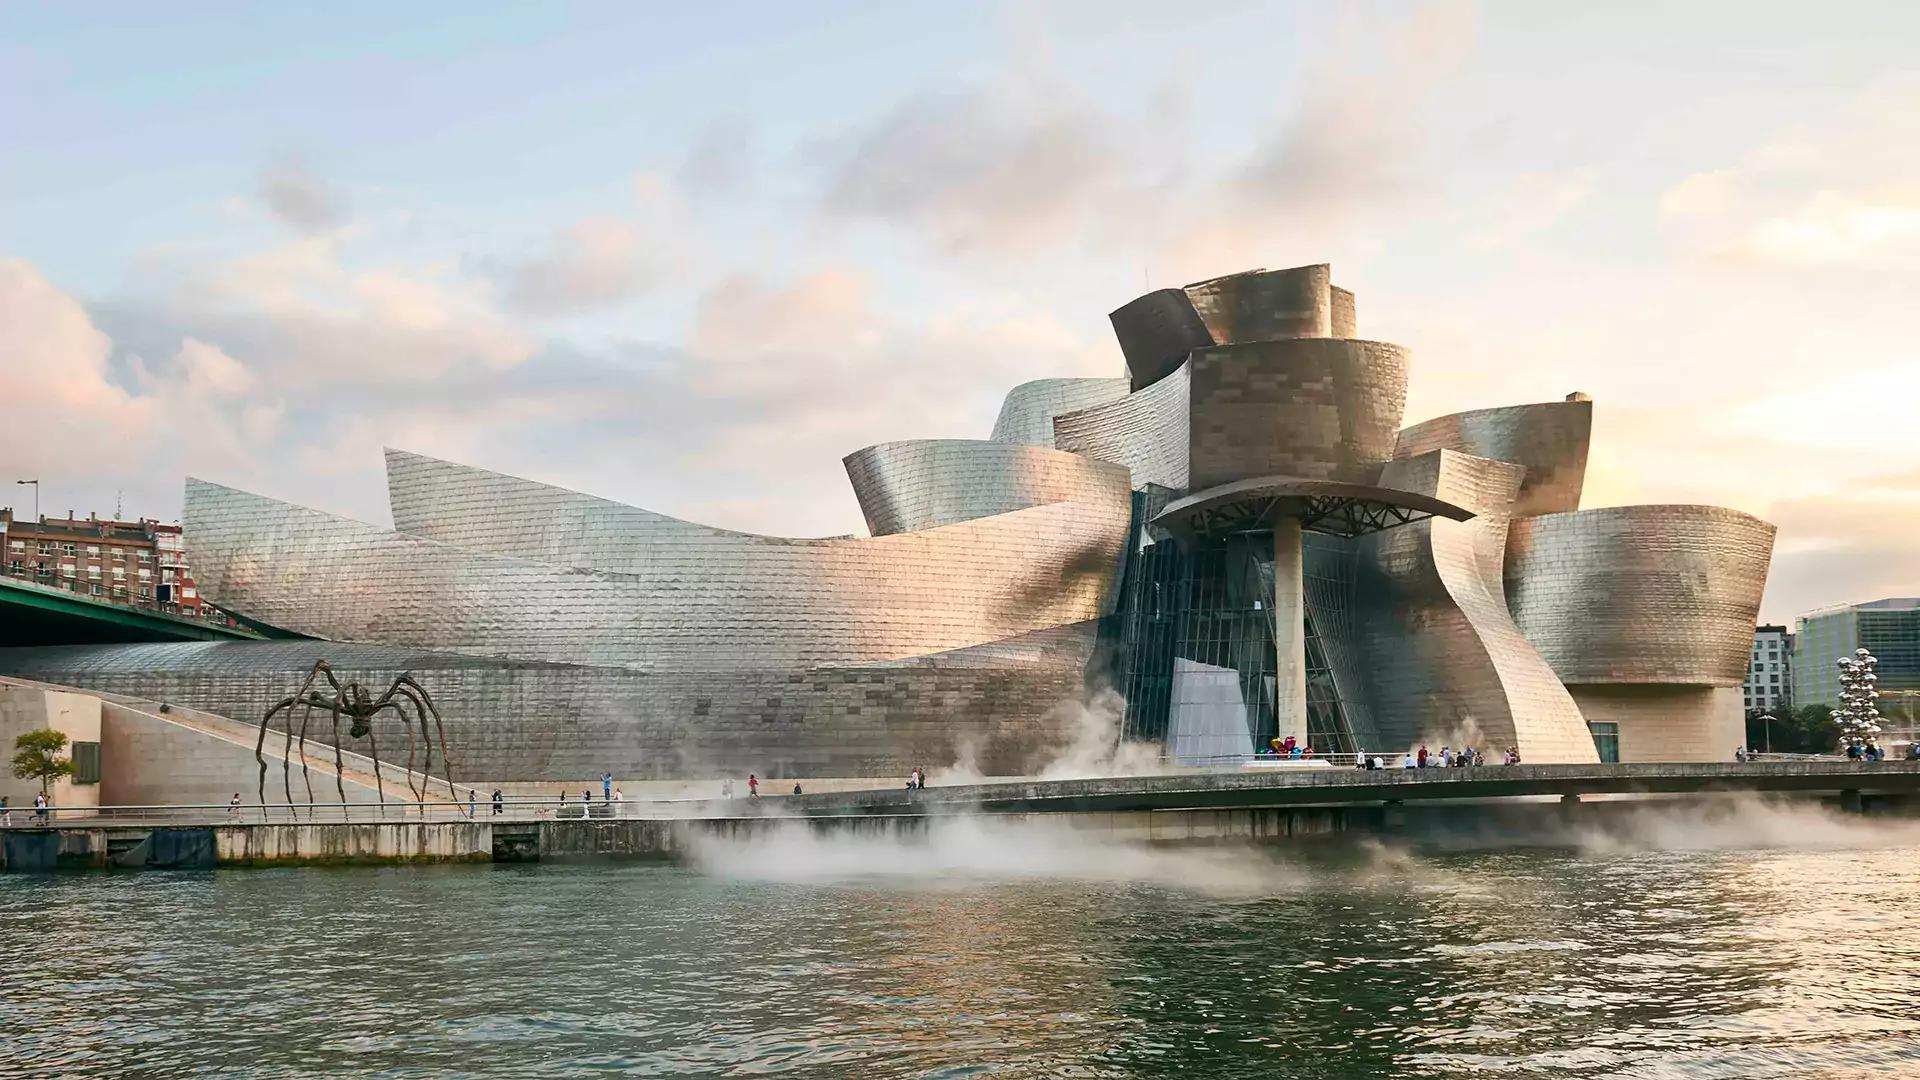 Guggenheim Museum Bilbao in Spain